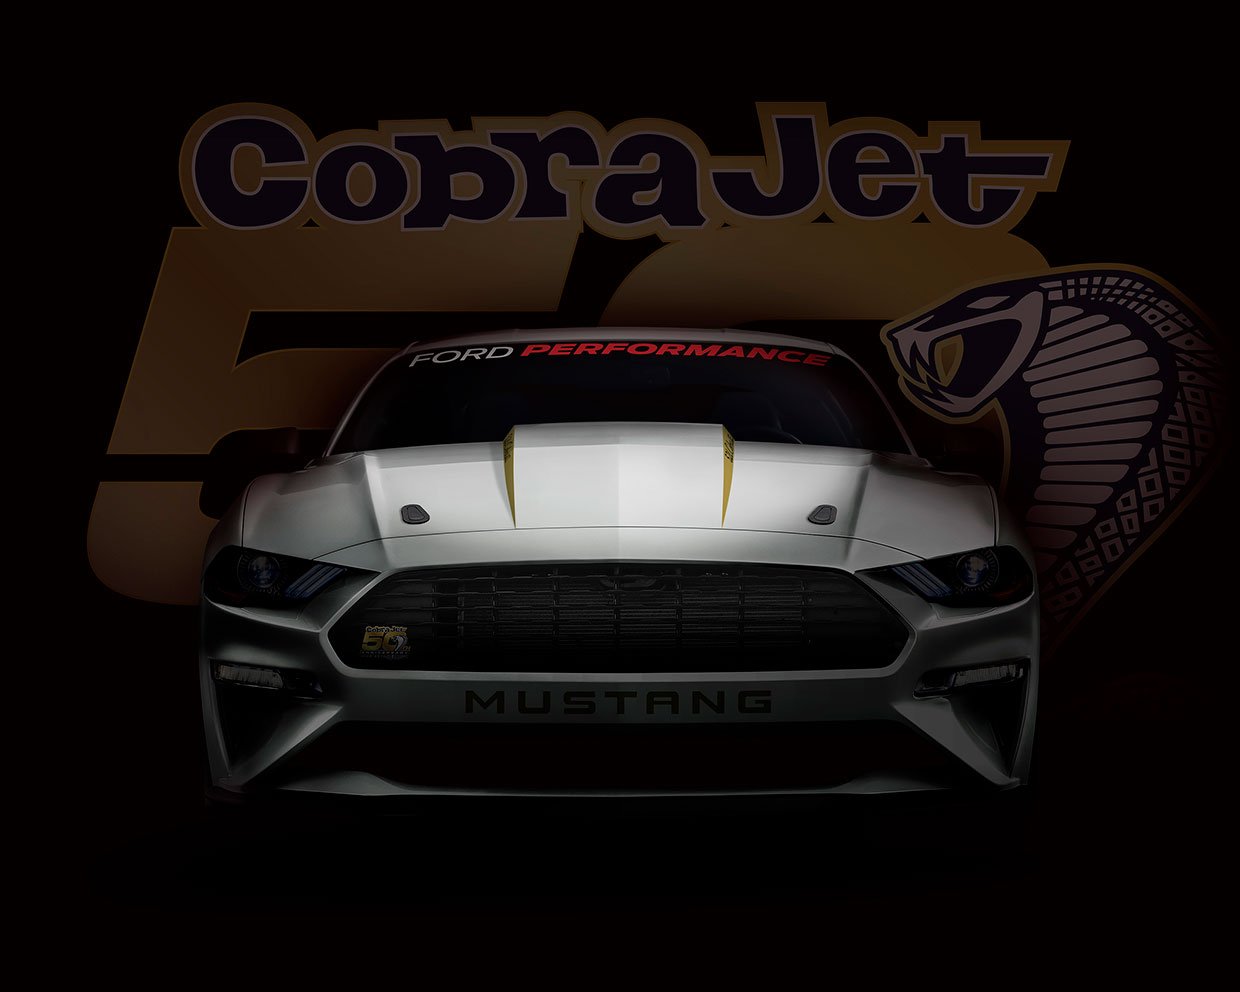 2018 Cobra Jet Mustang Celebrates 50 Years on the Drag Strip